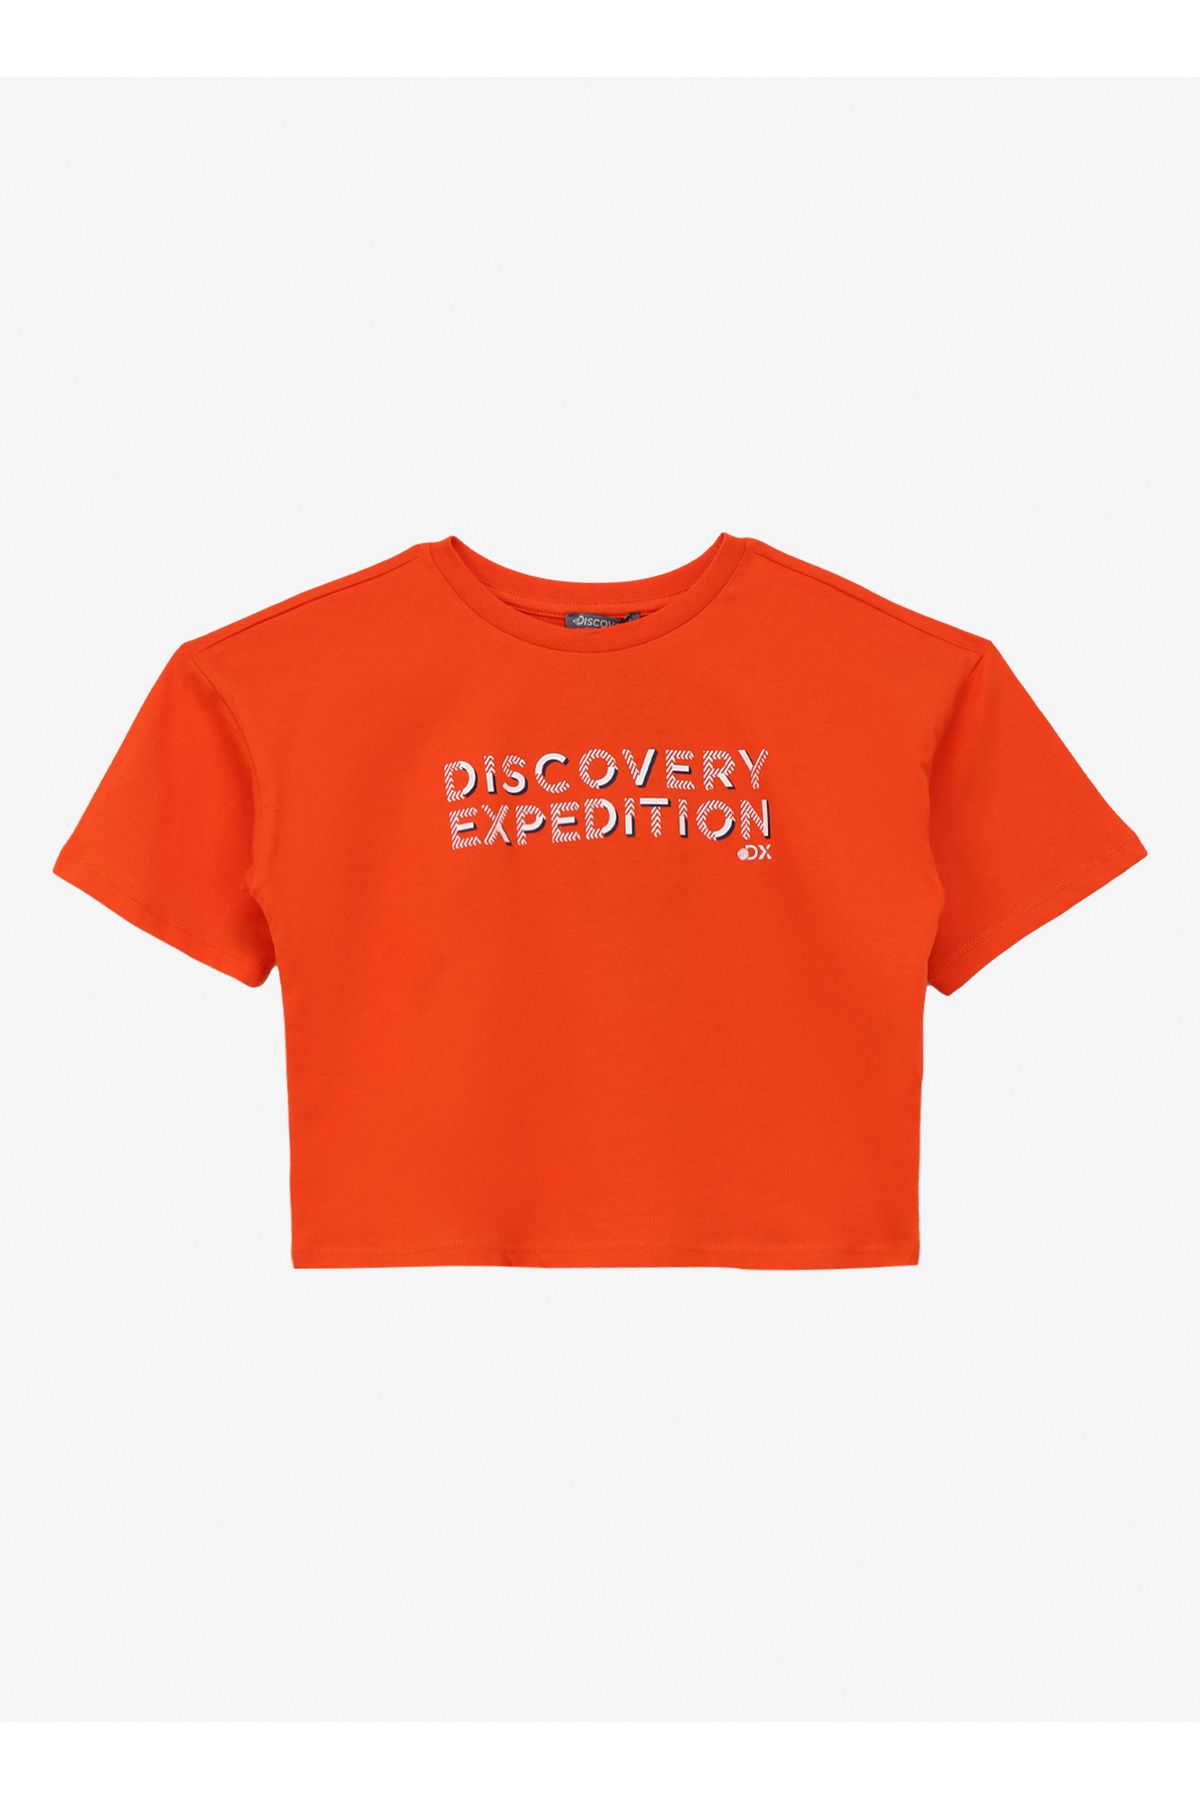 Discovery Expedition Turuncu Kız Çocuk Bisiklet Yaka Oversize Baskılı T-shirt D4sg-tst3103